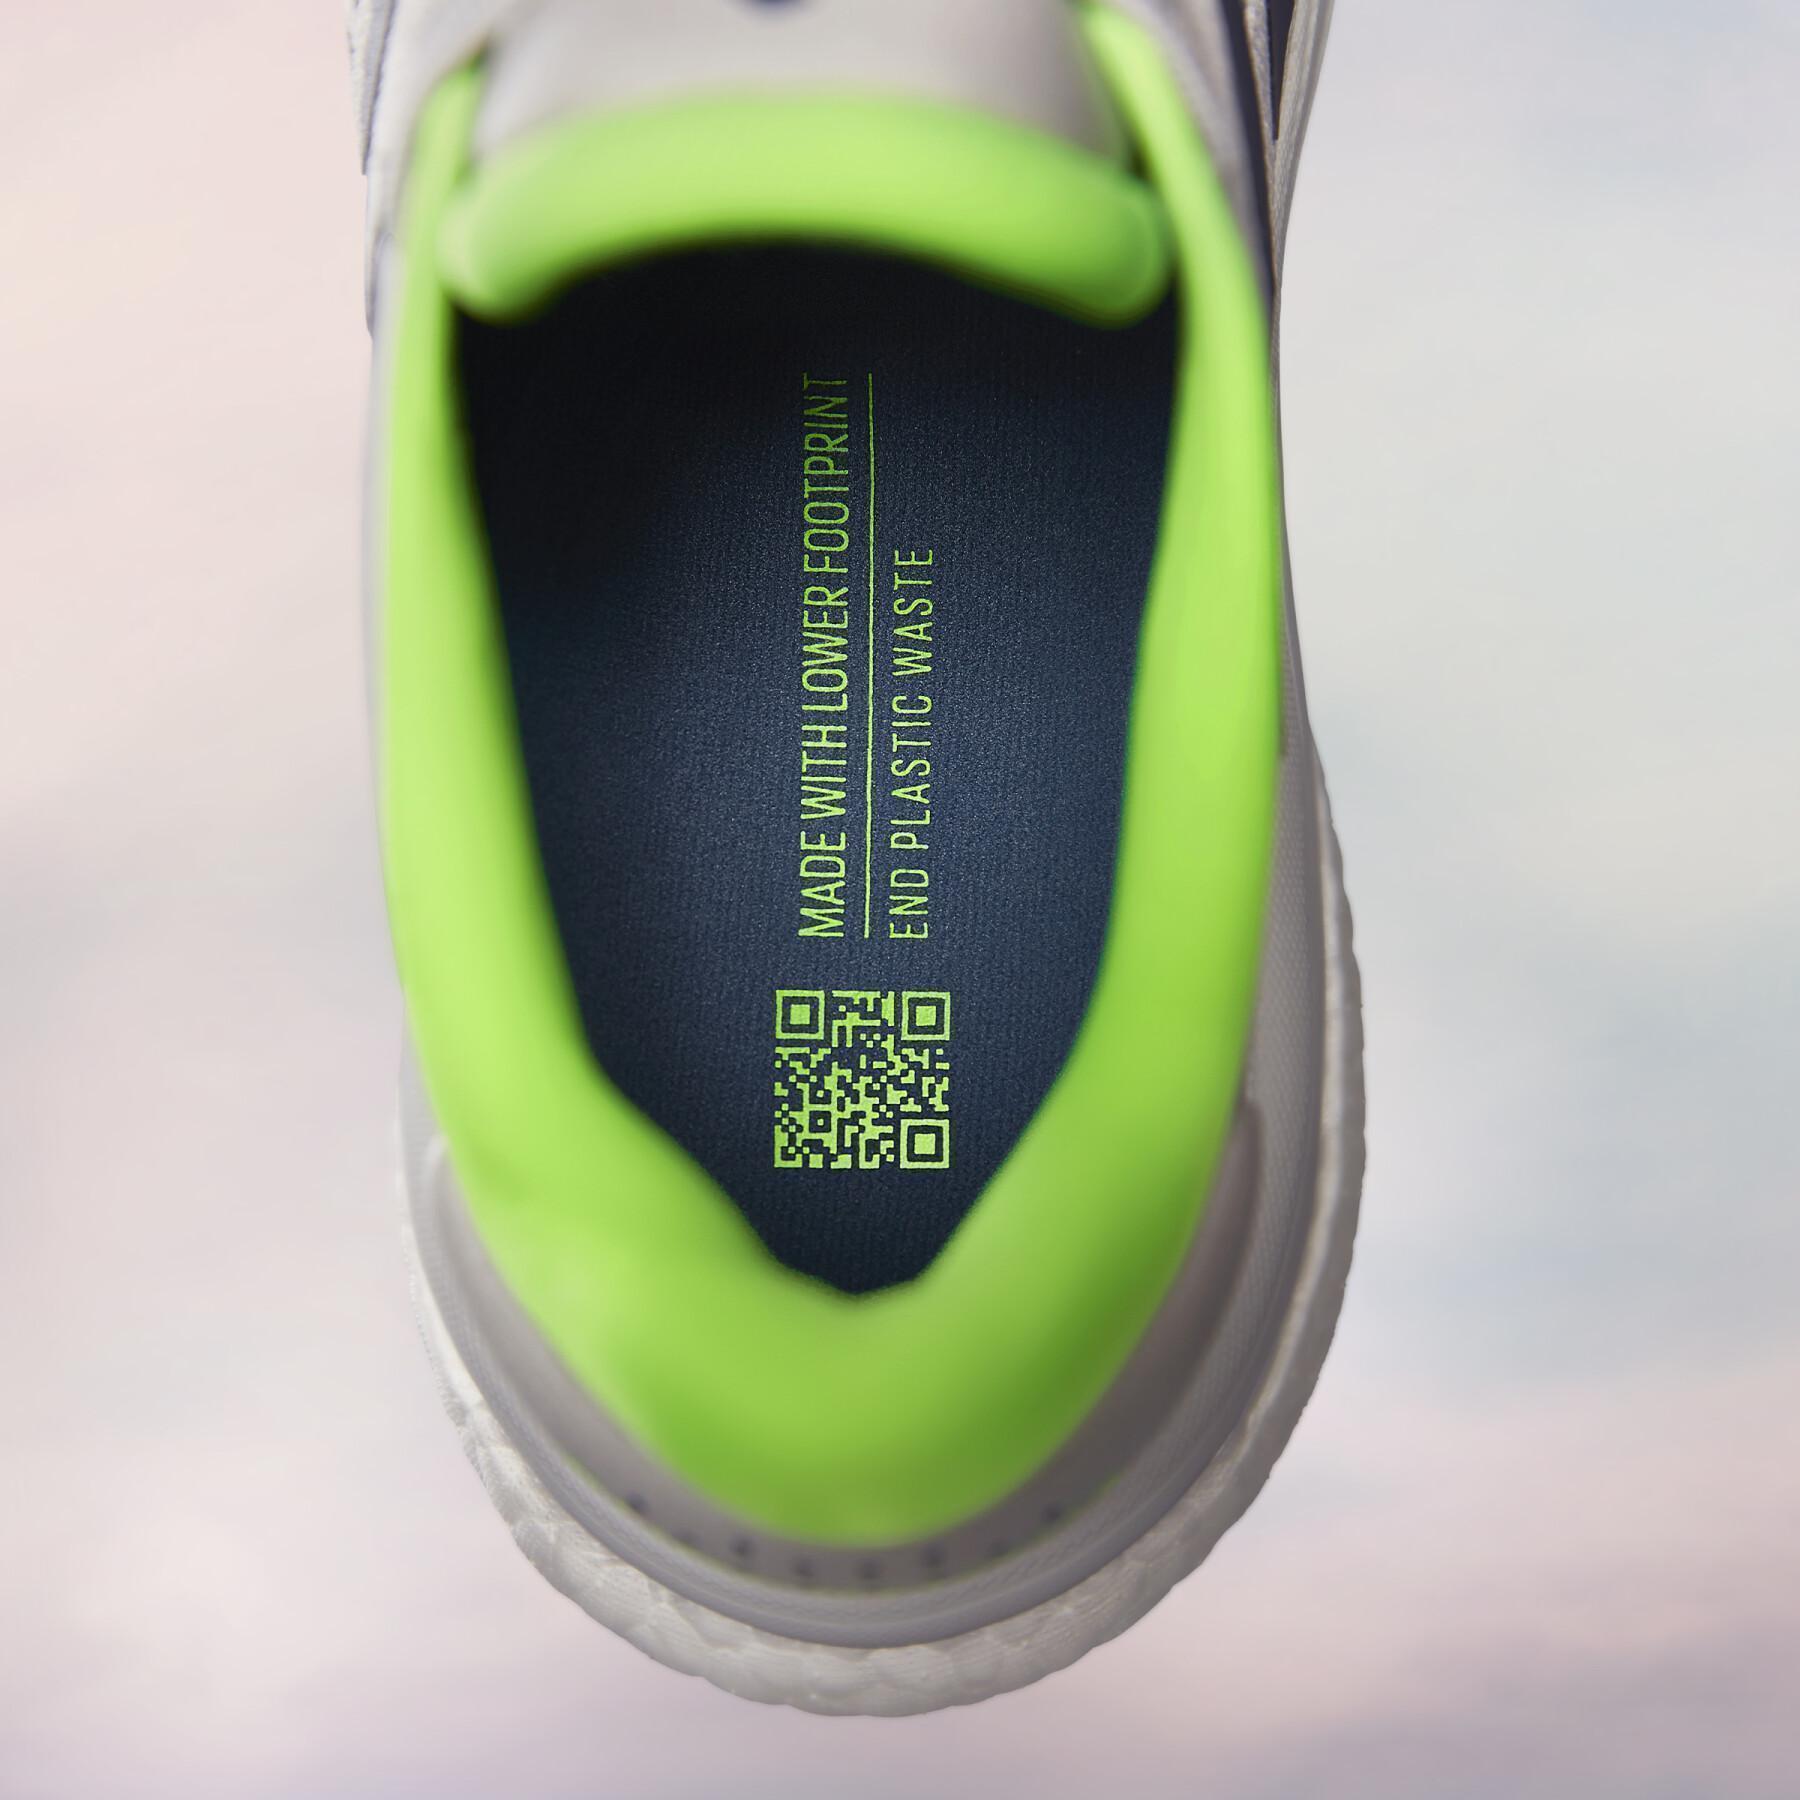 Running shoes adidas Supernova 2